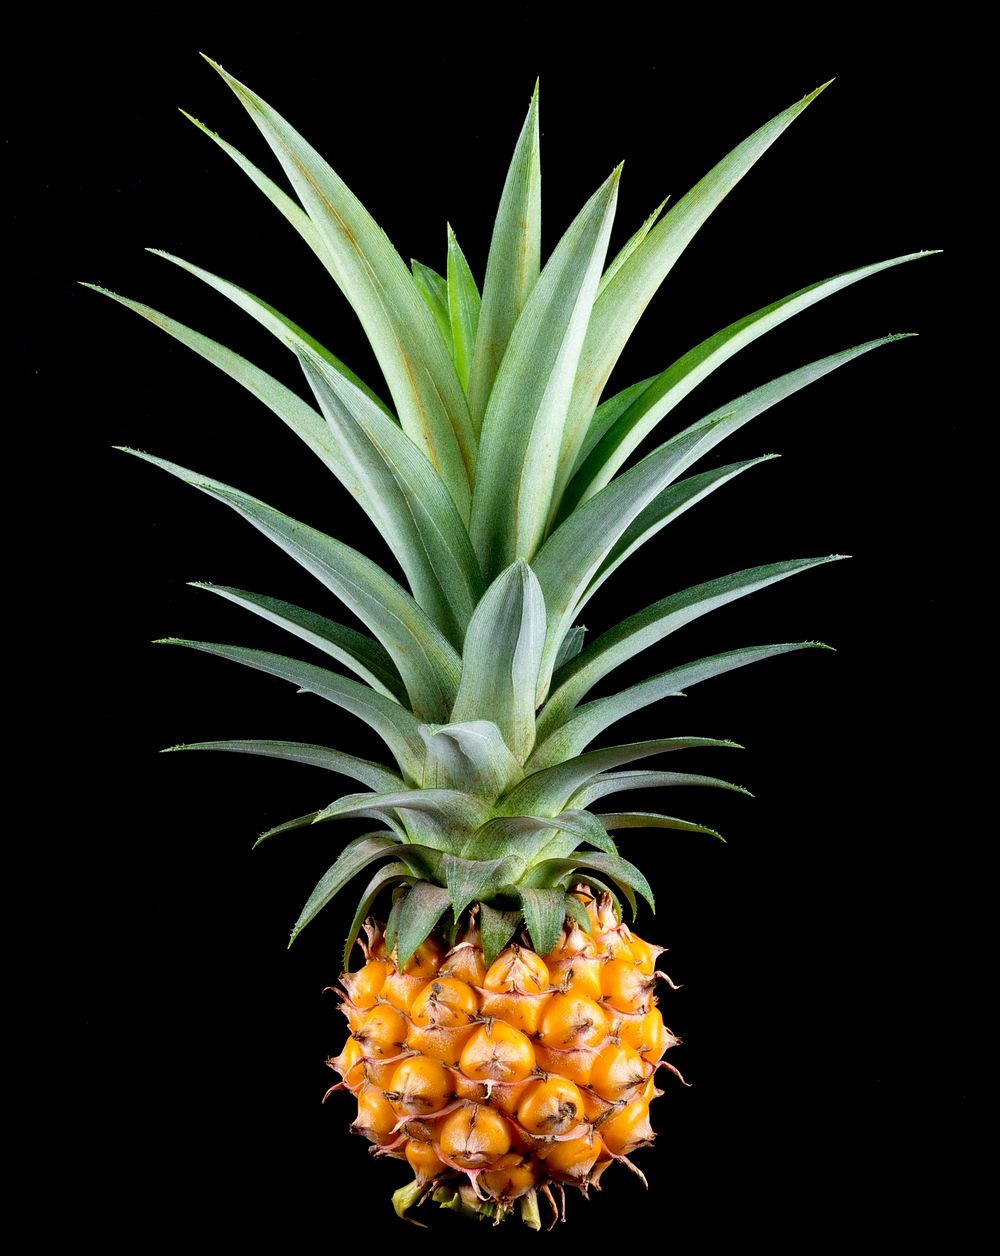 Free pineapple image, public domain fruit CC0 photo.